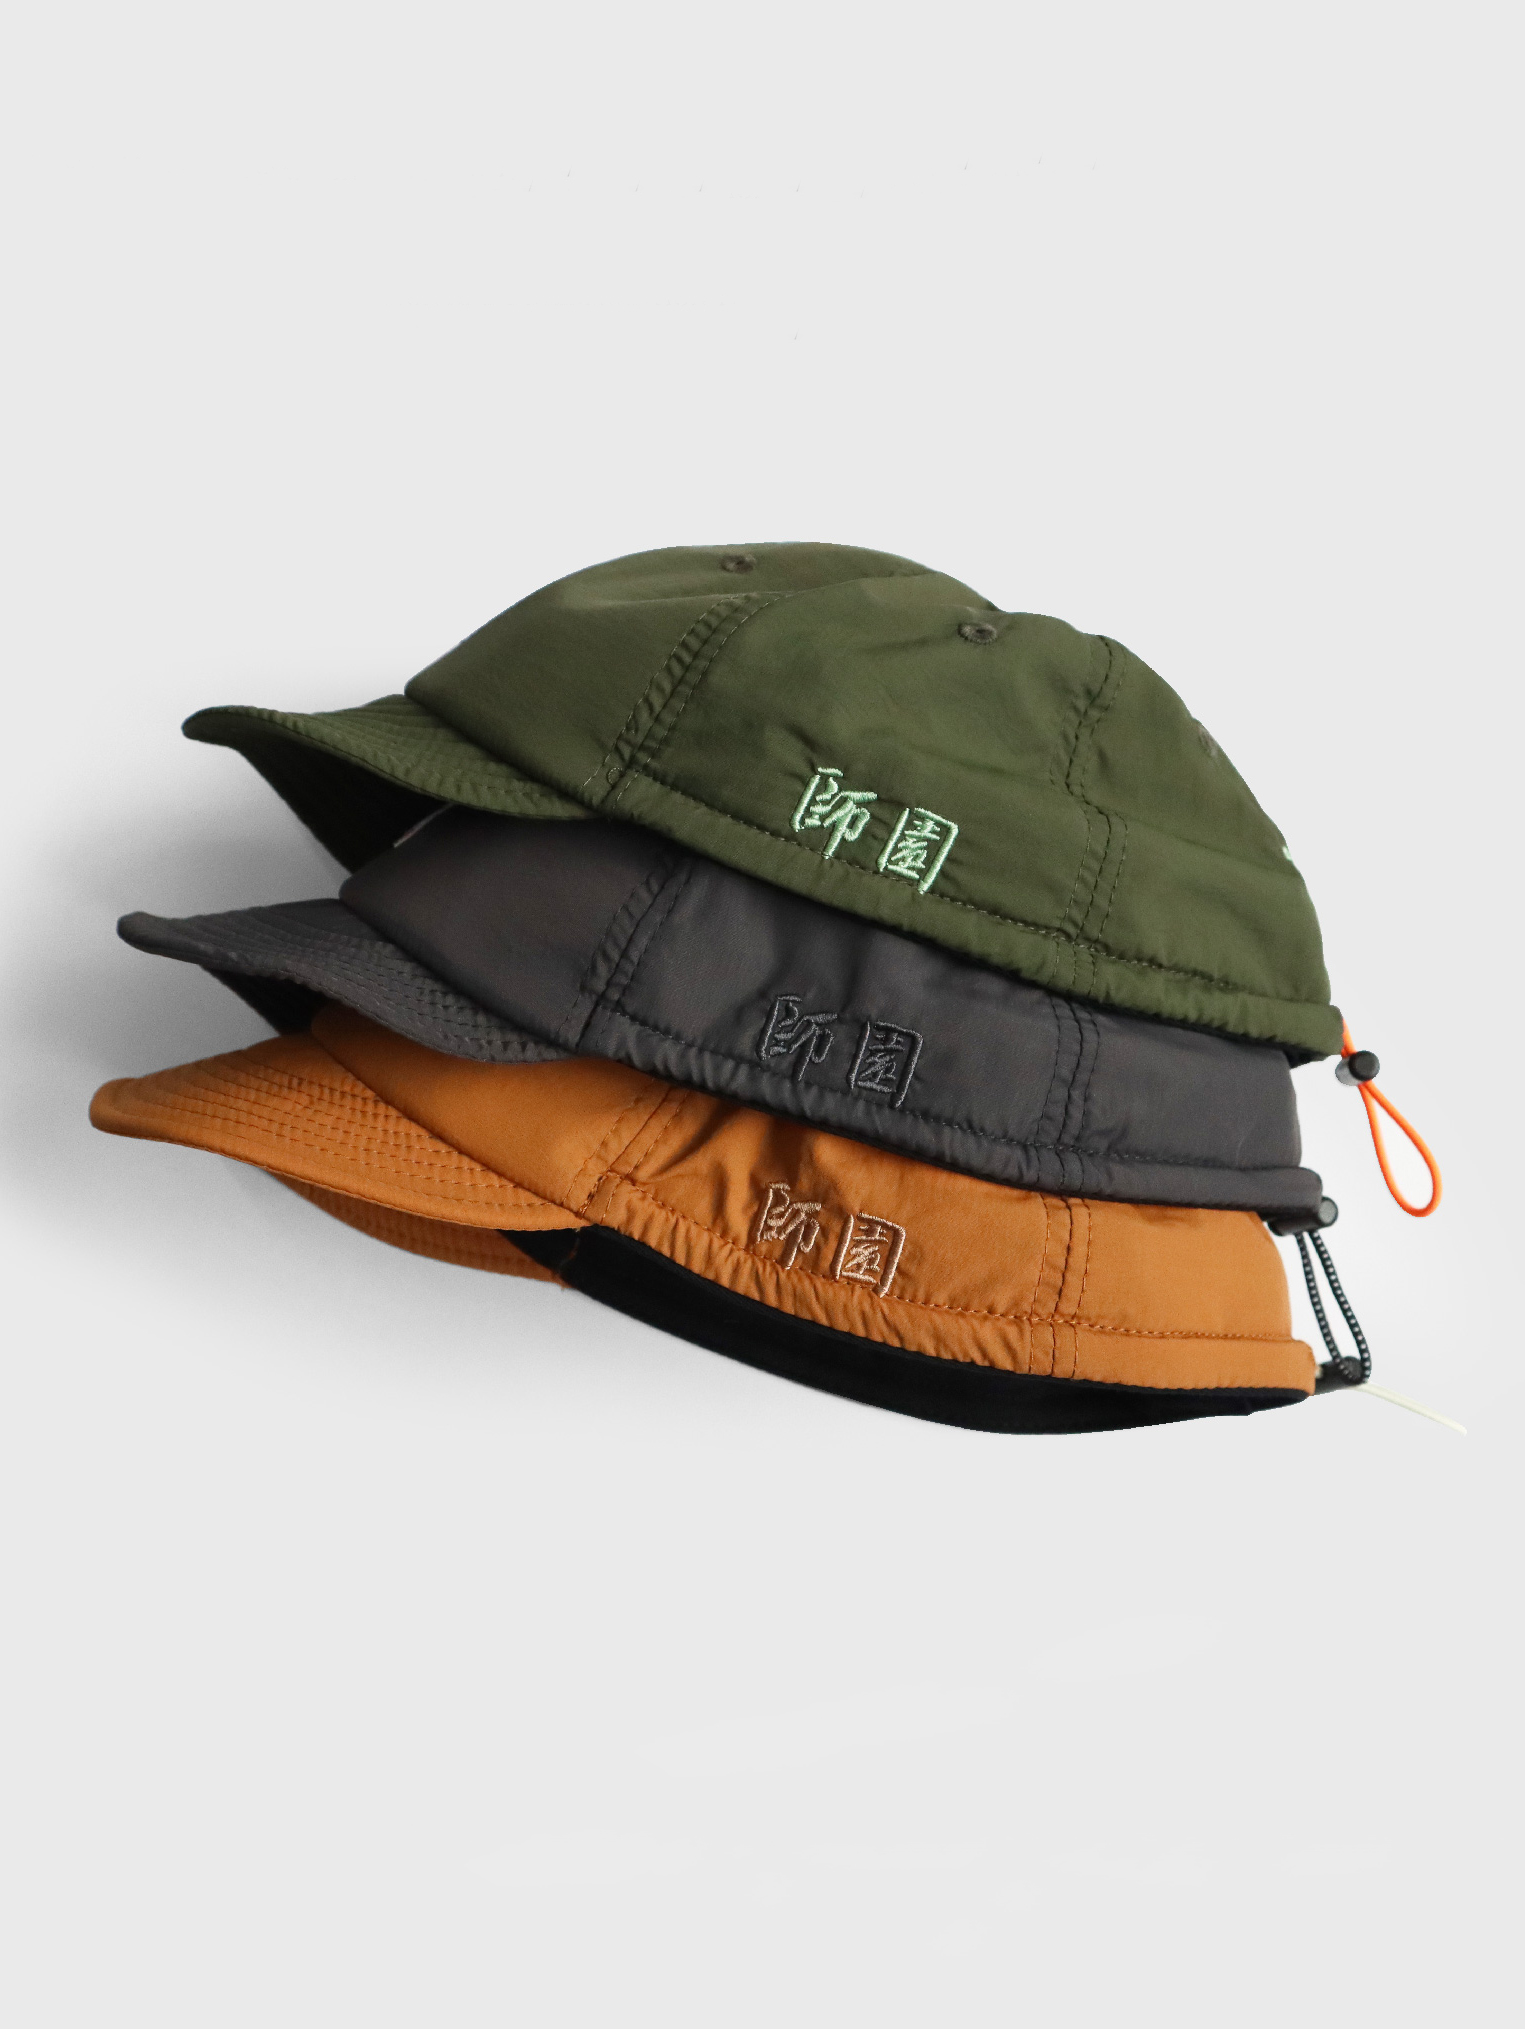  帽子 | CAP